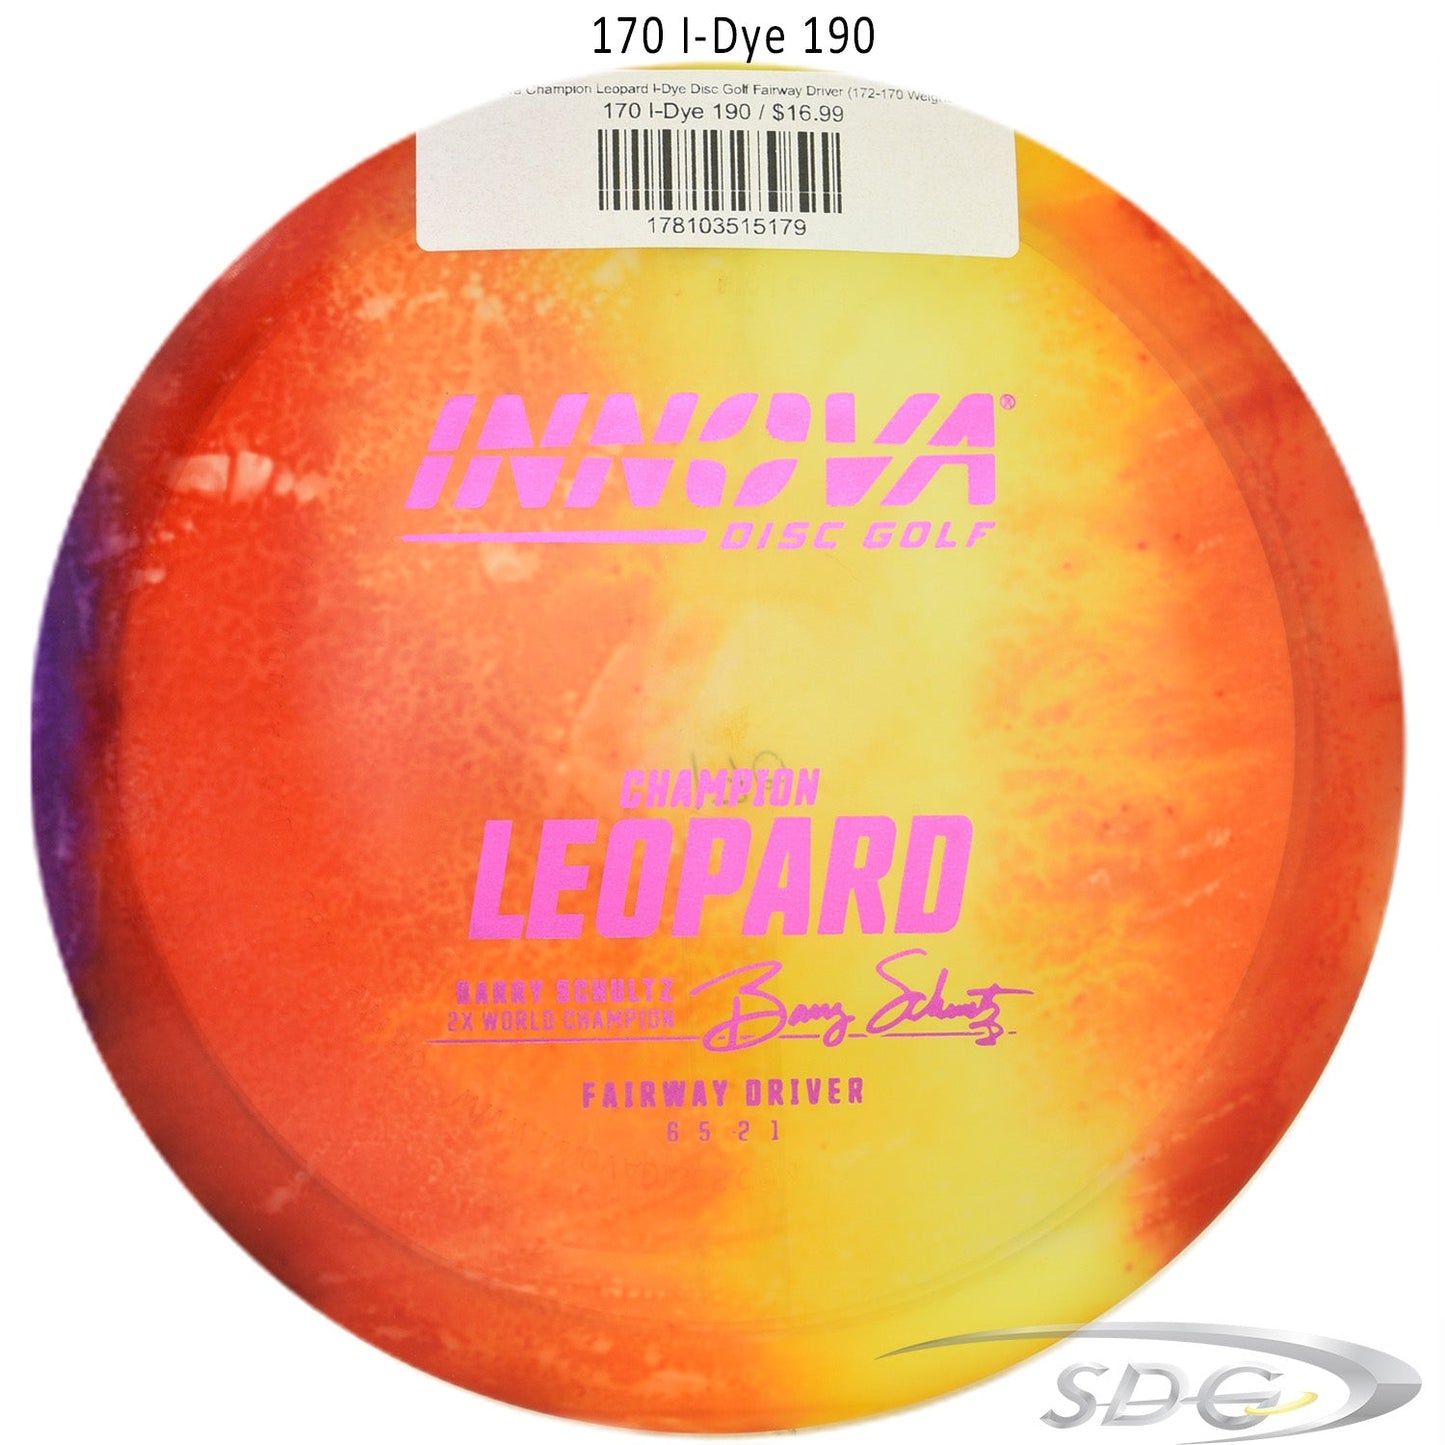 innova-champion-leopard-i-dye-disc-golf-fairway-driver 170 I-Dye 190 